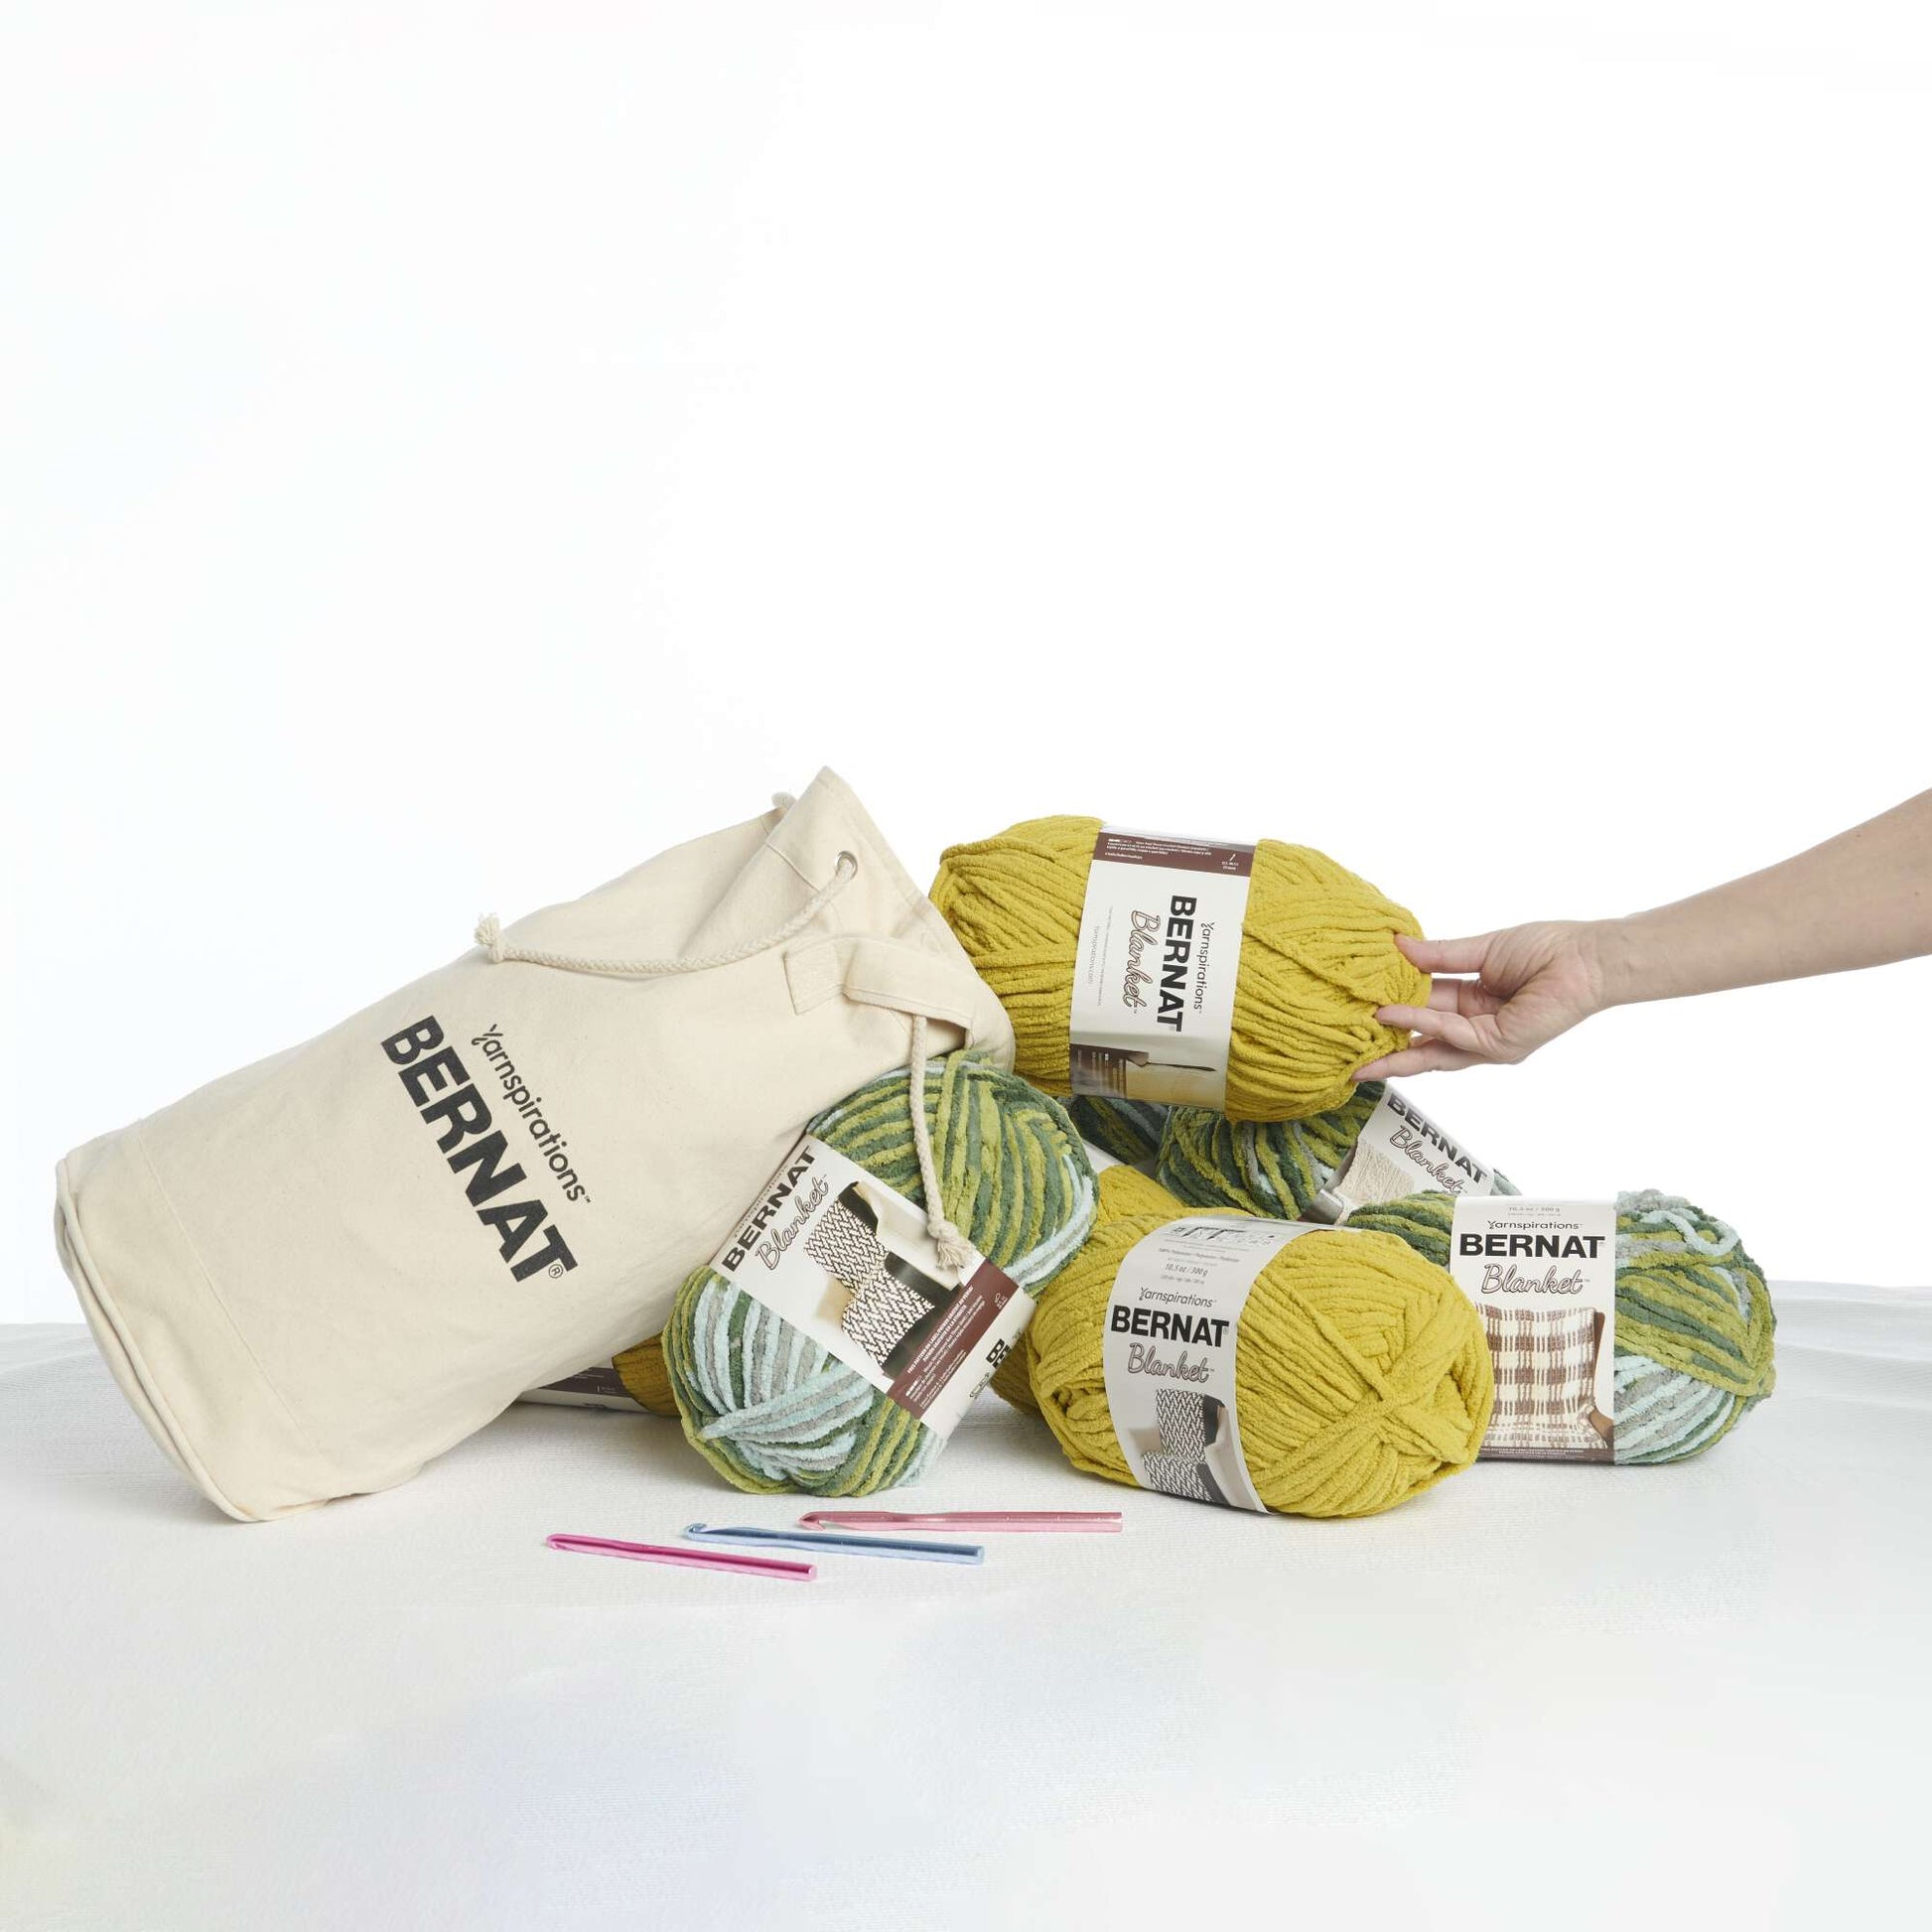 Bernat Blanket Yarn 2 Pack by Bernat